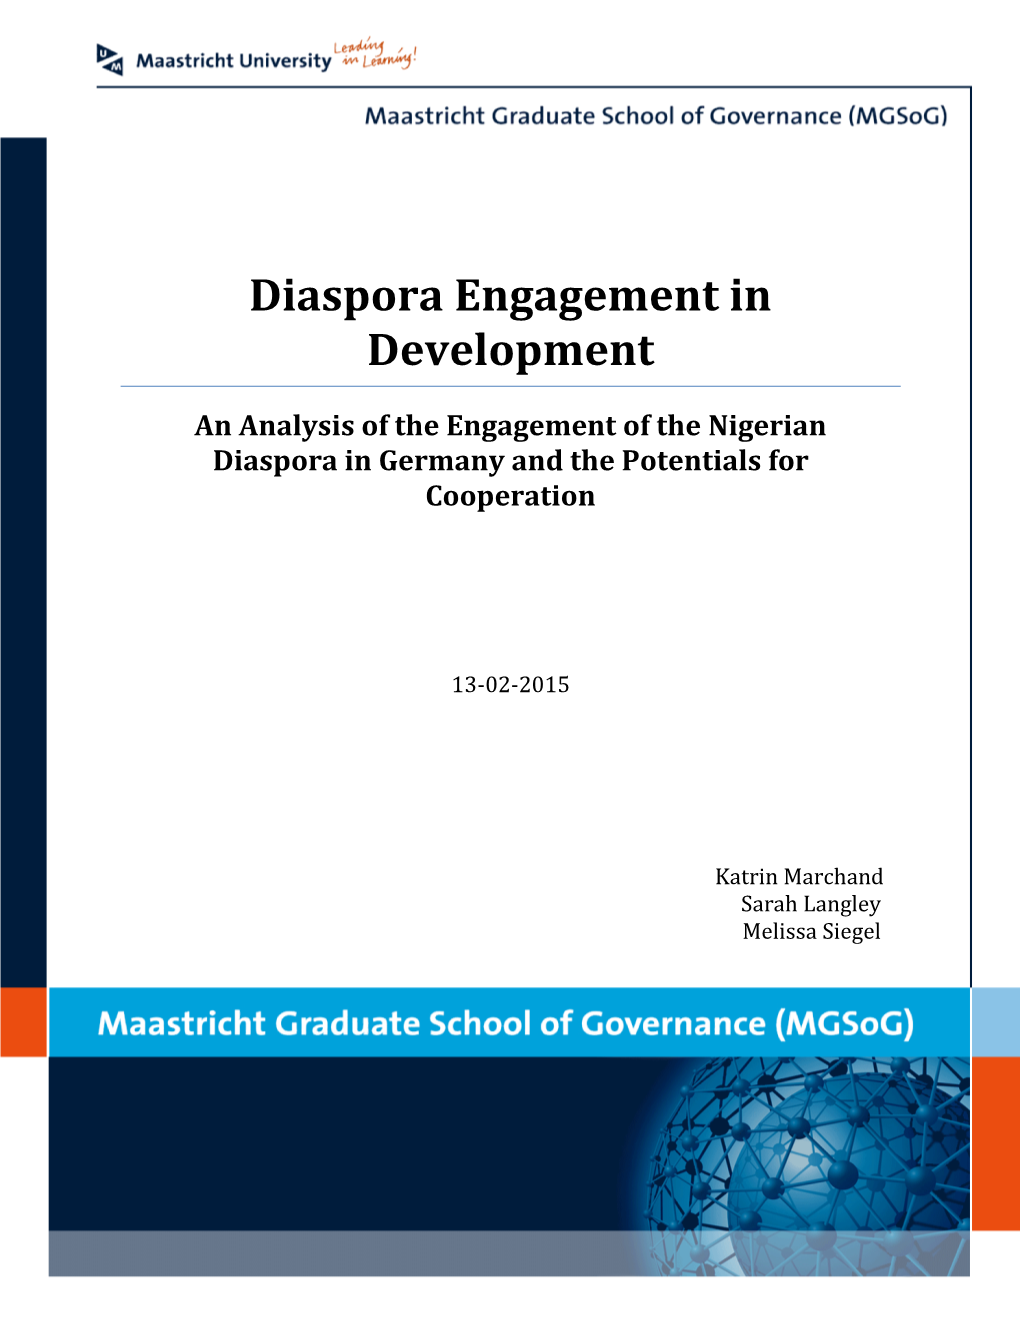 Diaspora Engagement in Development